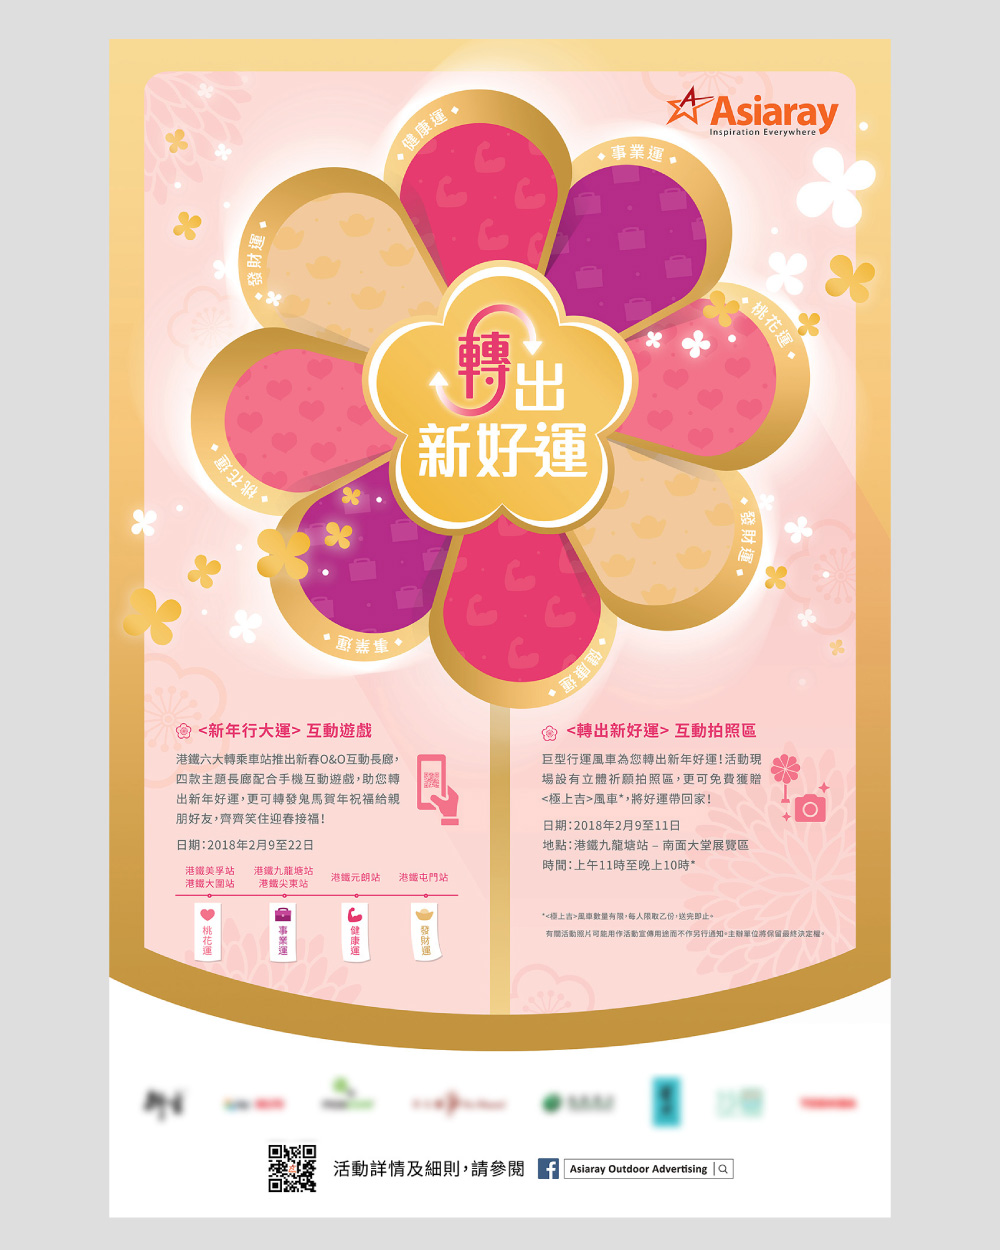 Asiaray CNY MTR Artwork & Exhibition Design